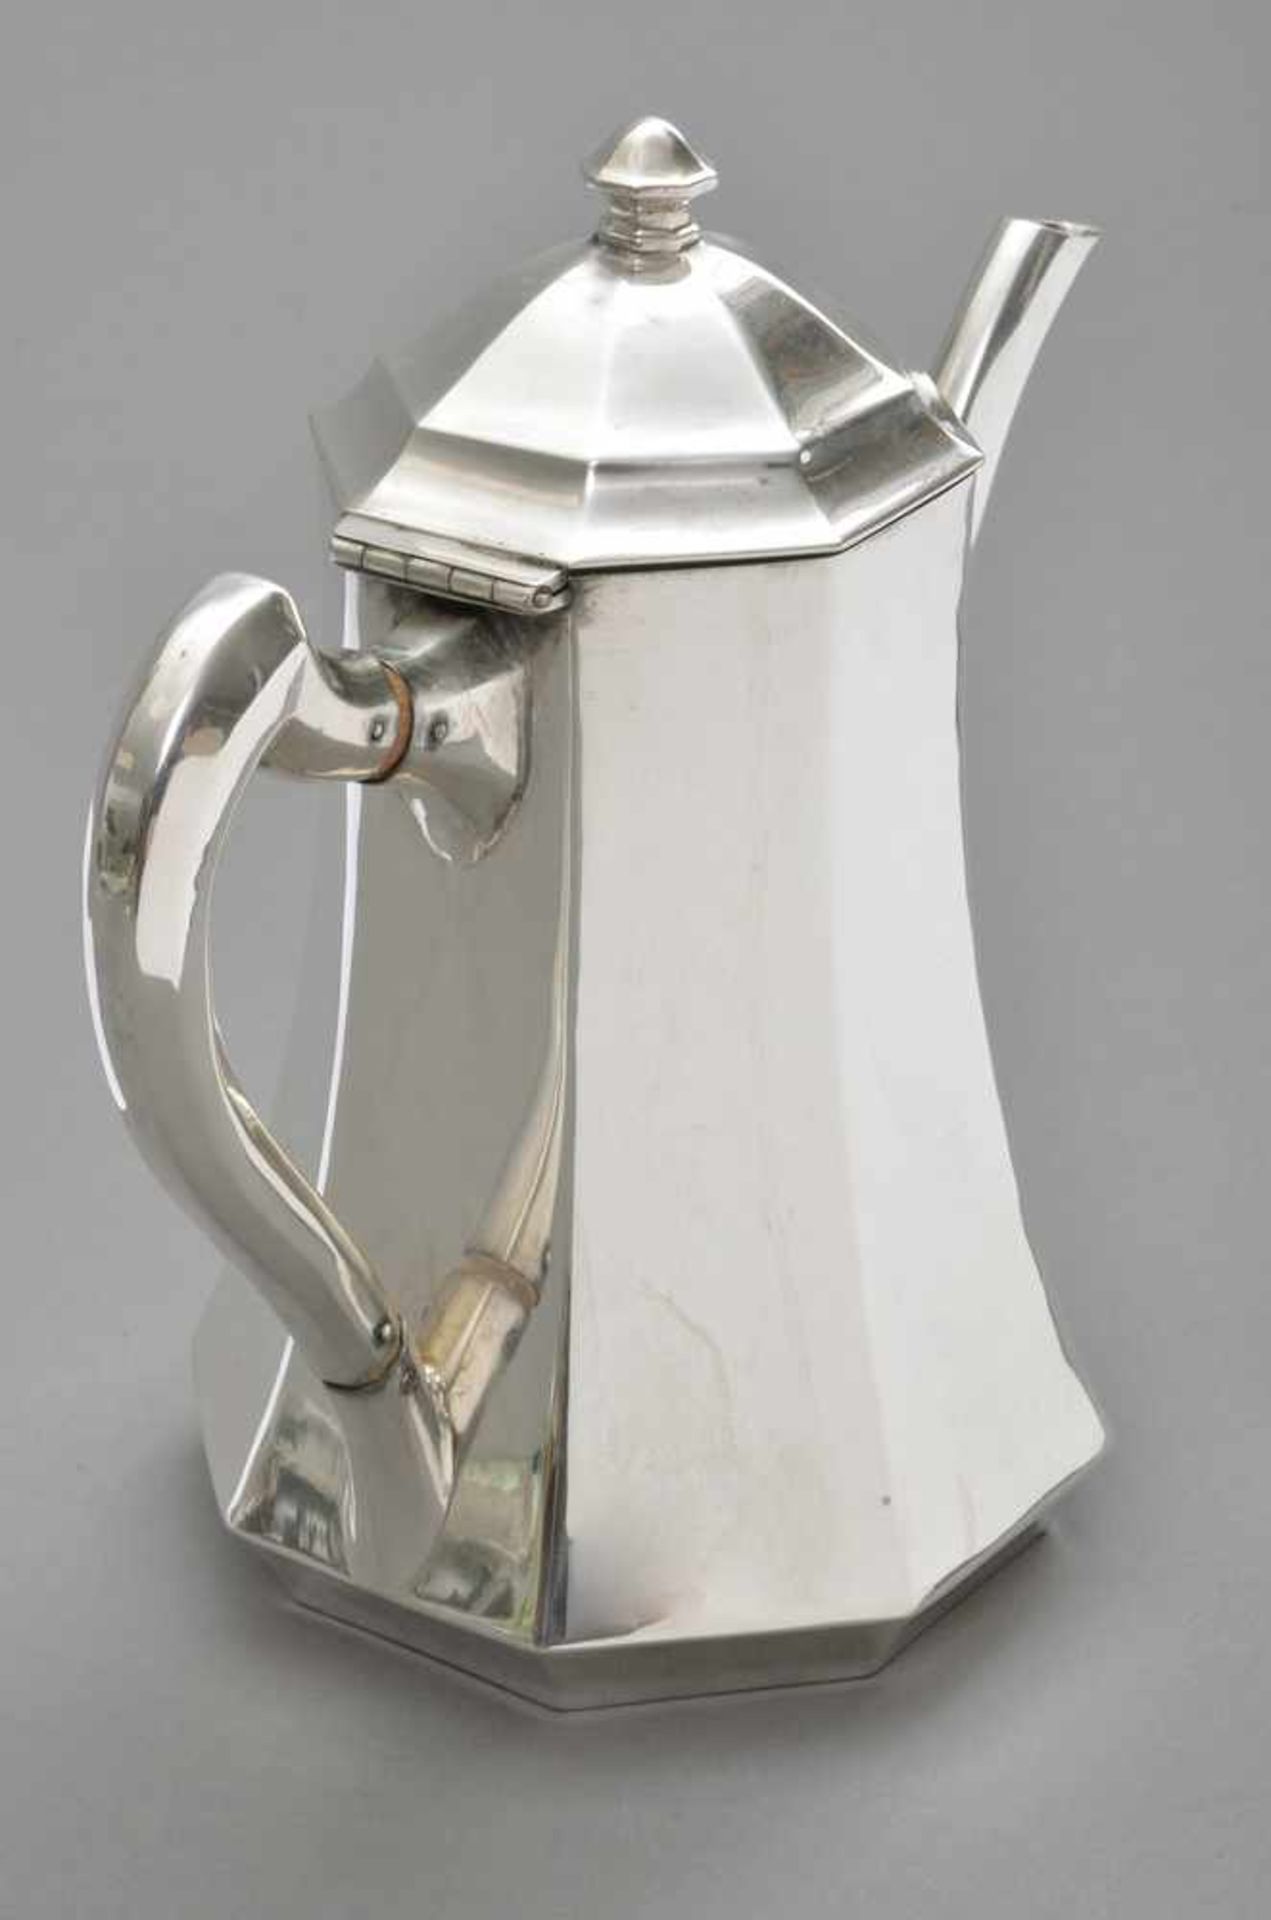 Oktogonale Kaffeekanne mit facettierter Wandung, Silber 800, 407g, Italien, H. 19cm - Image 2 of 2